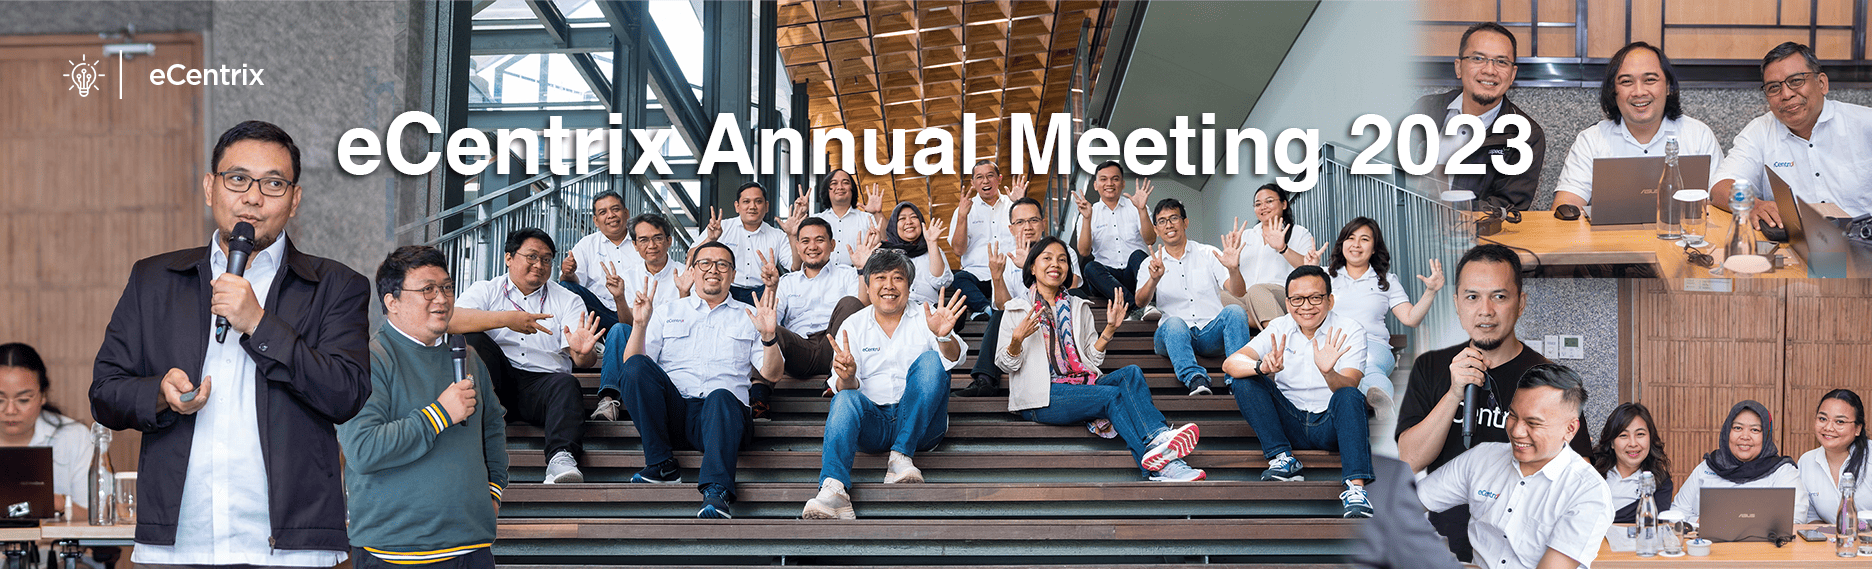 Annual Meeting eCentrix 2023: Membangun Masa Depan Bersama dalam Solusi Contact Center